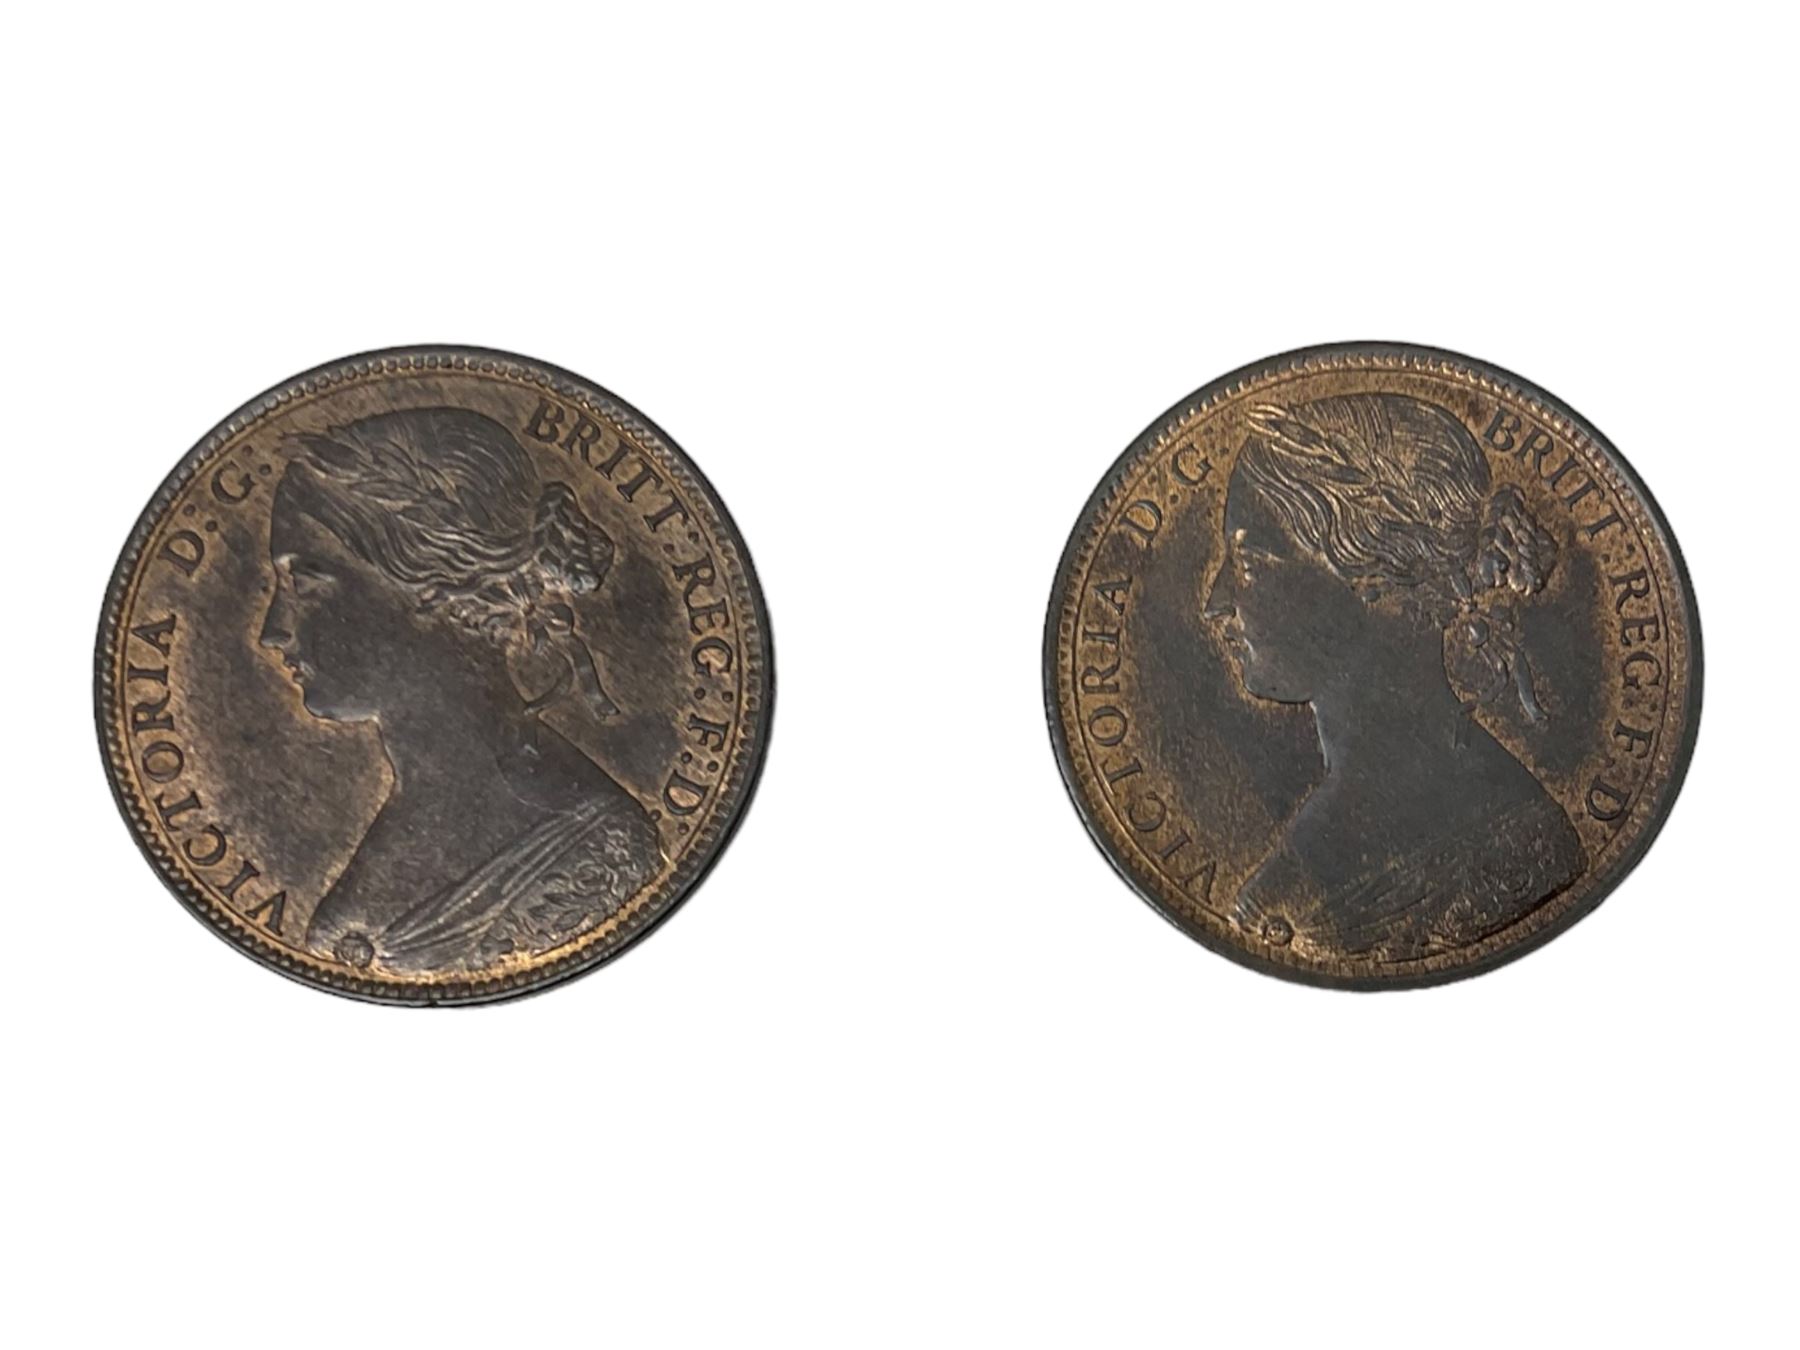 Two Queen Victoria 'bun head' penny coins - Image 2 of 2